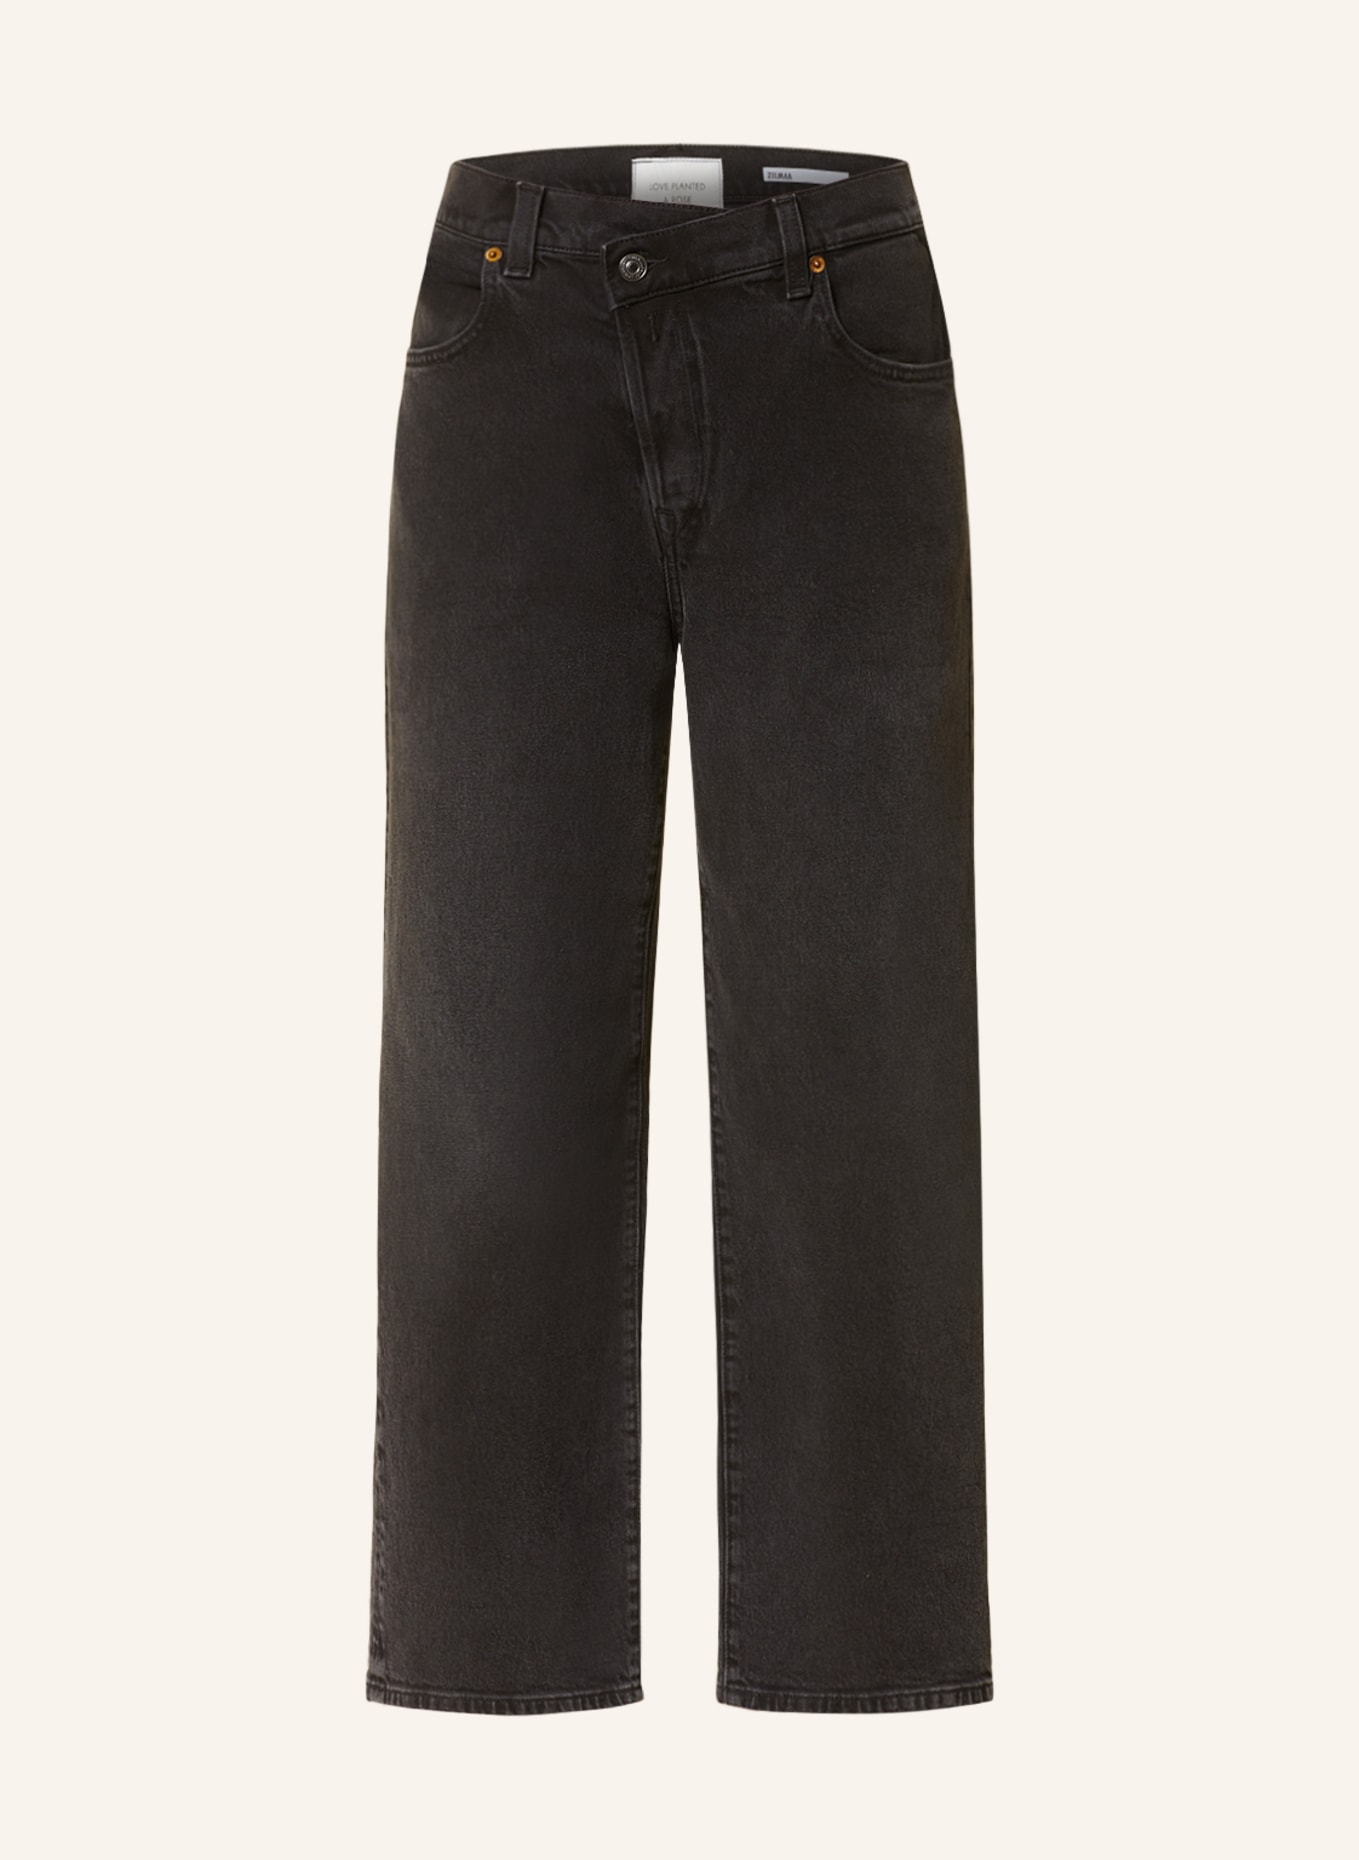 REPLAY Jeans, Farbe: 097 DARK GREY (Bild 1)